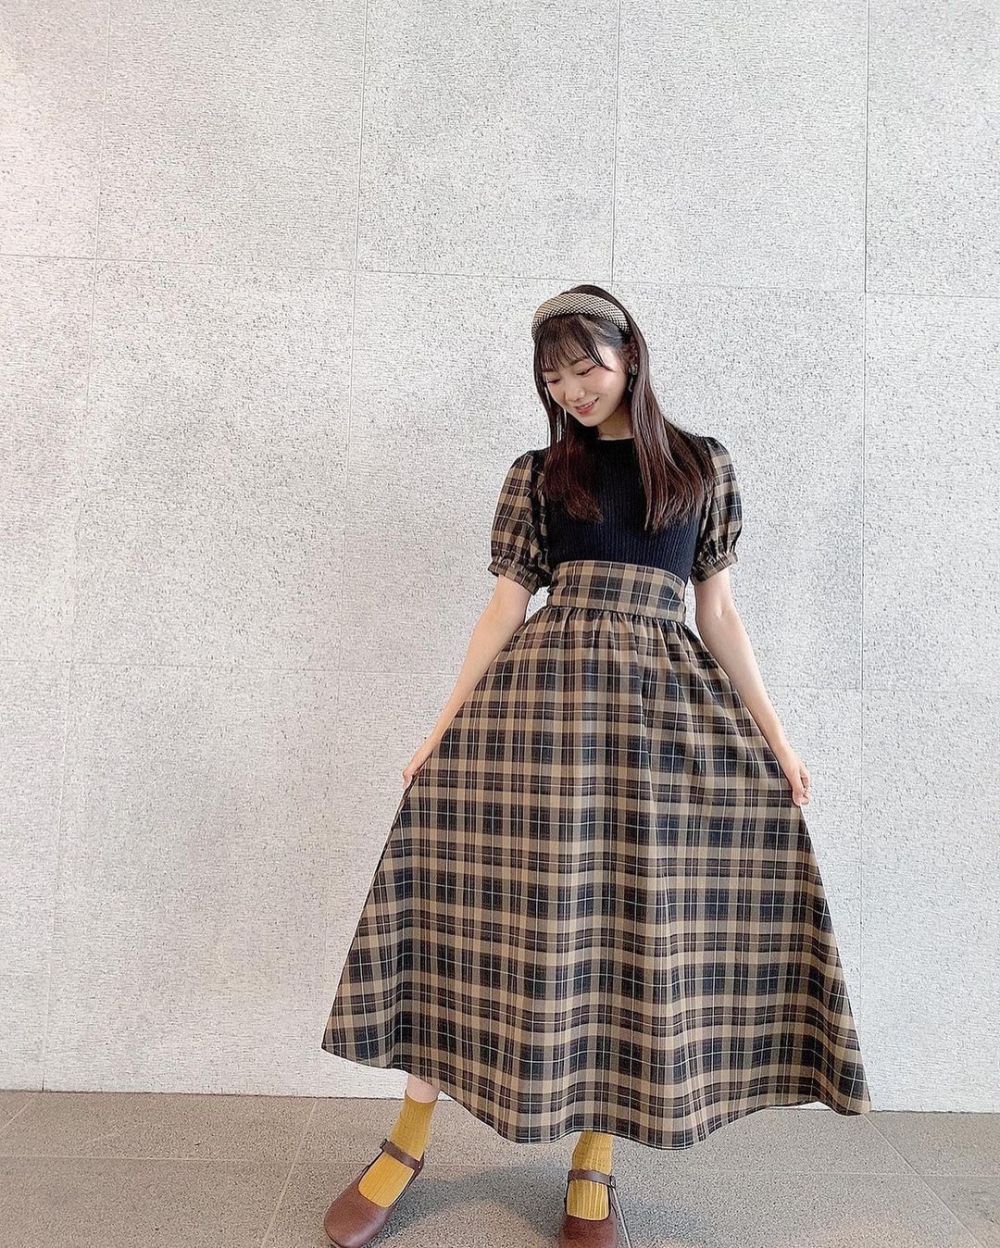 9 Inspirasi Outfit ala Fujisaki Miyu NGT48, Chic dan Manis!